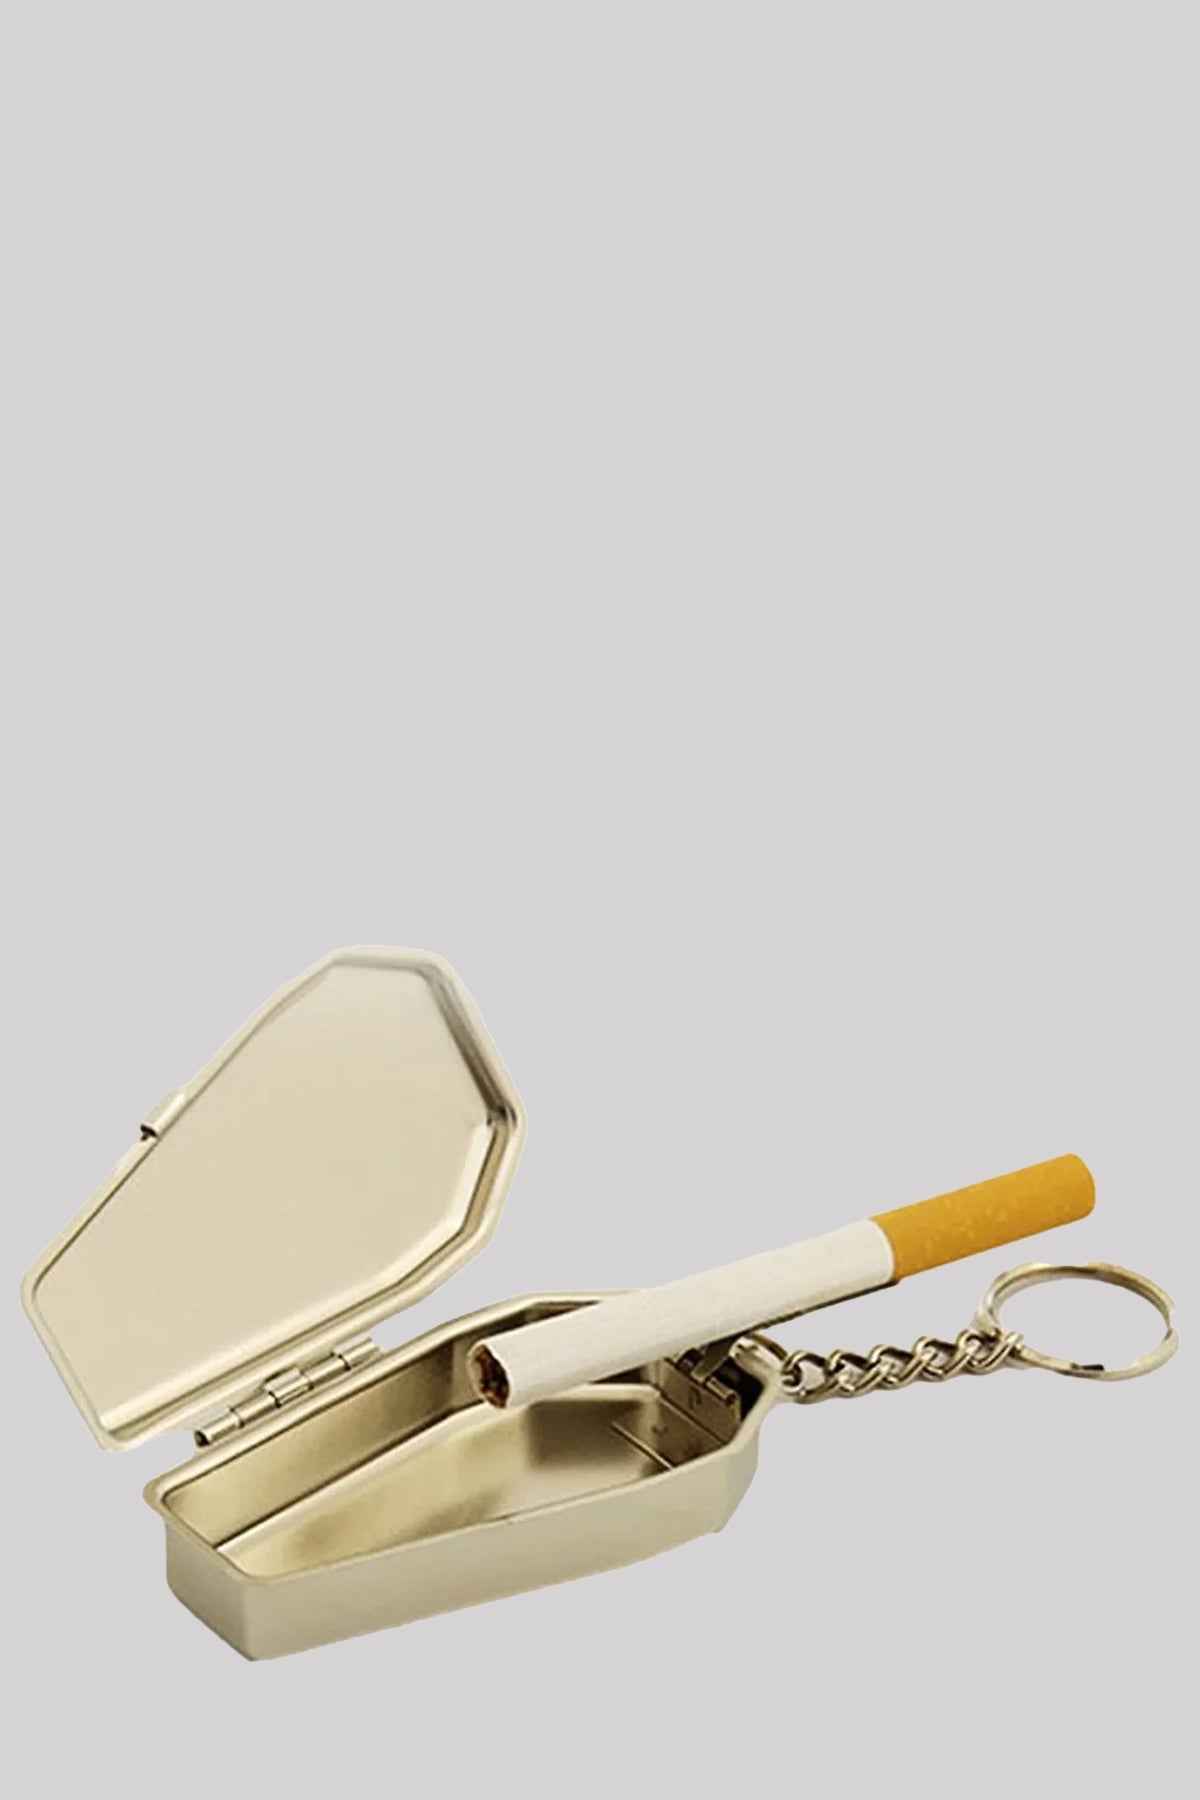 Ro Rox Mini Coffin Ashtray Metal Portable Gothic Keychain